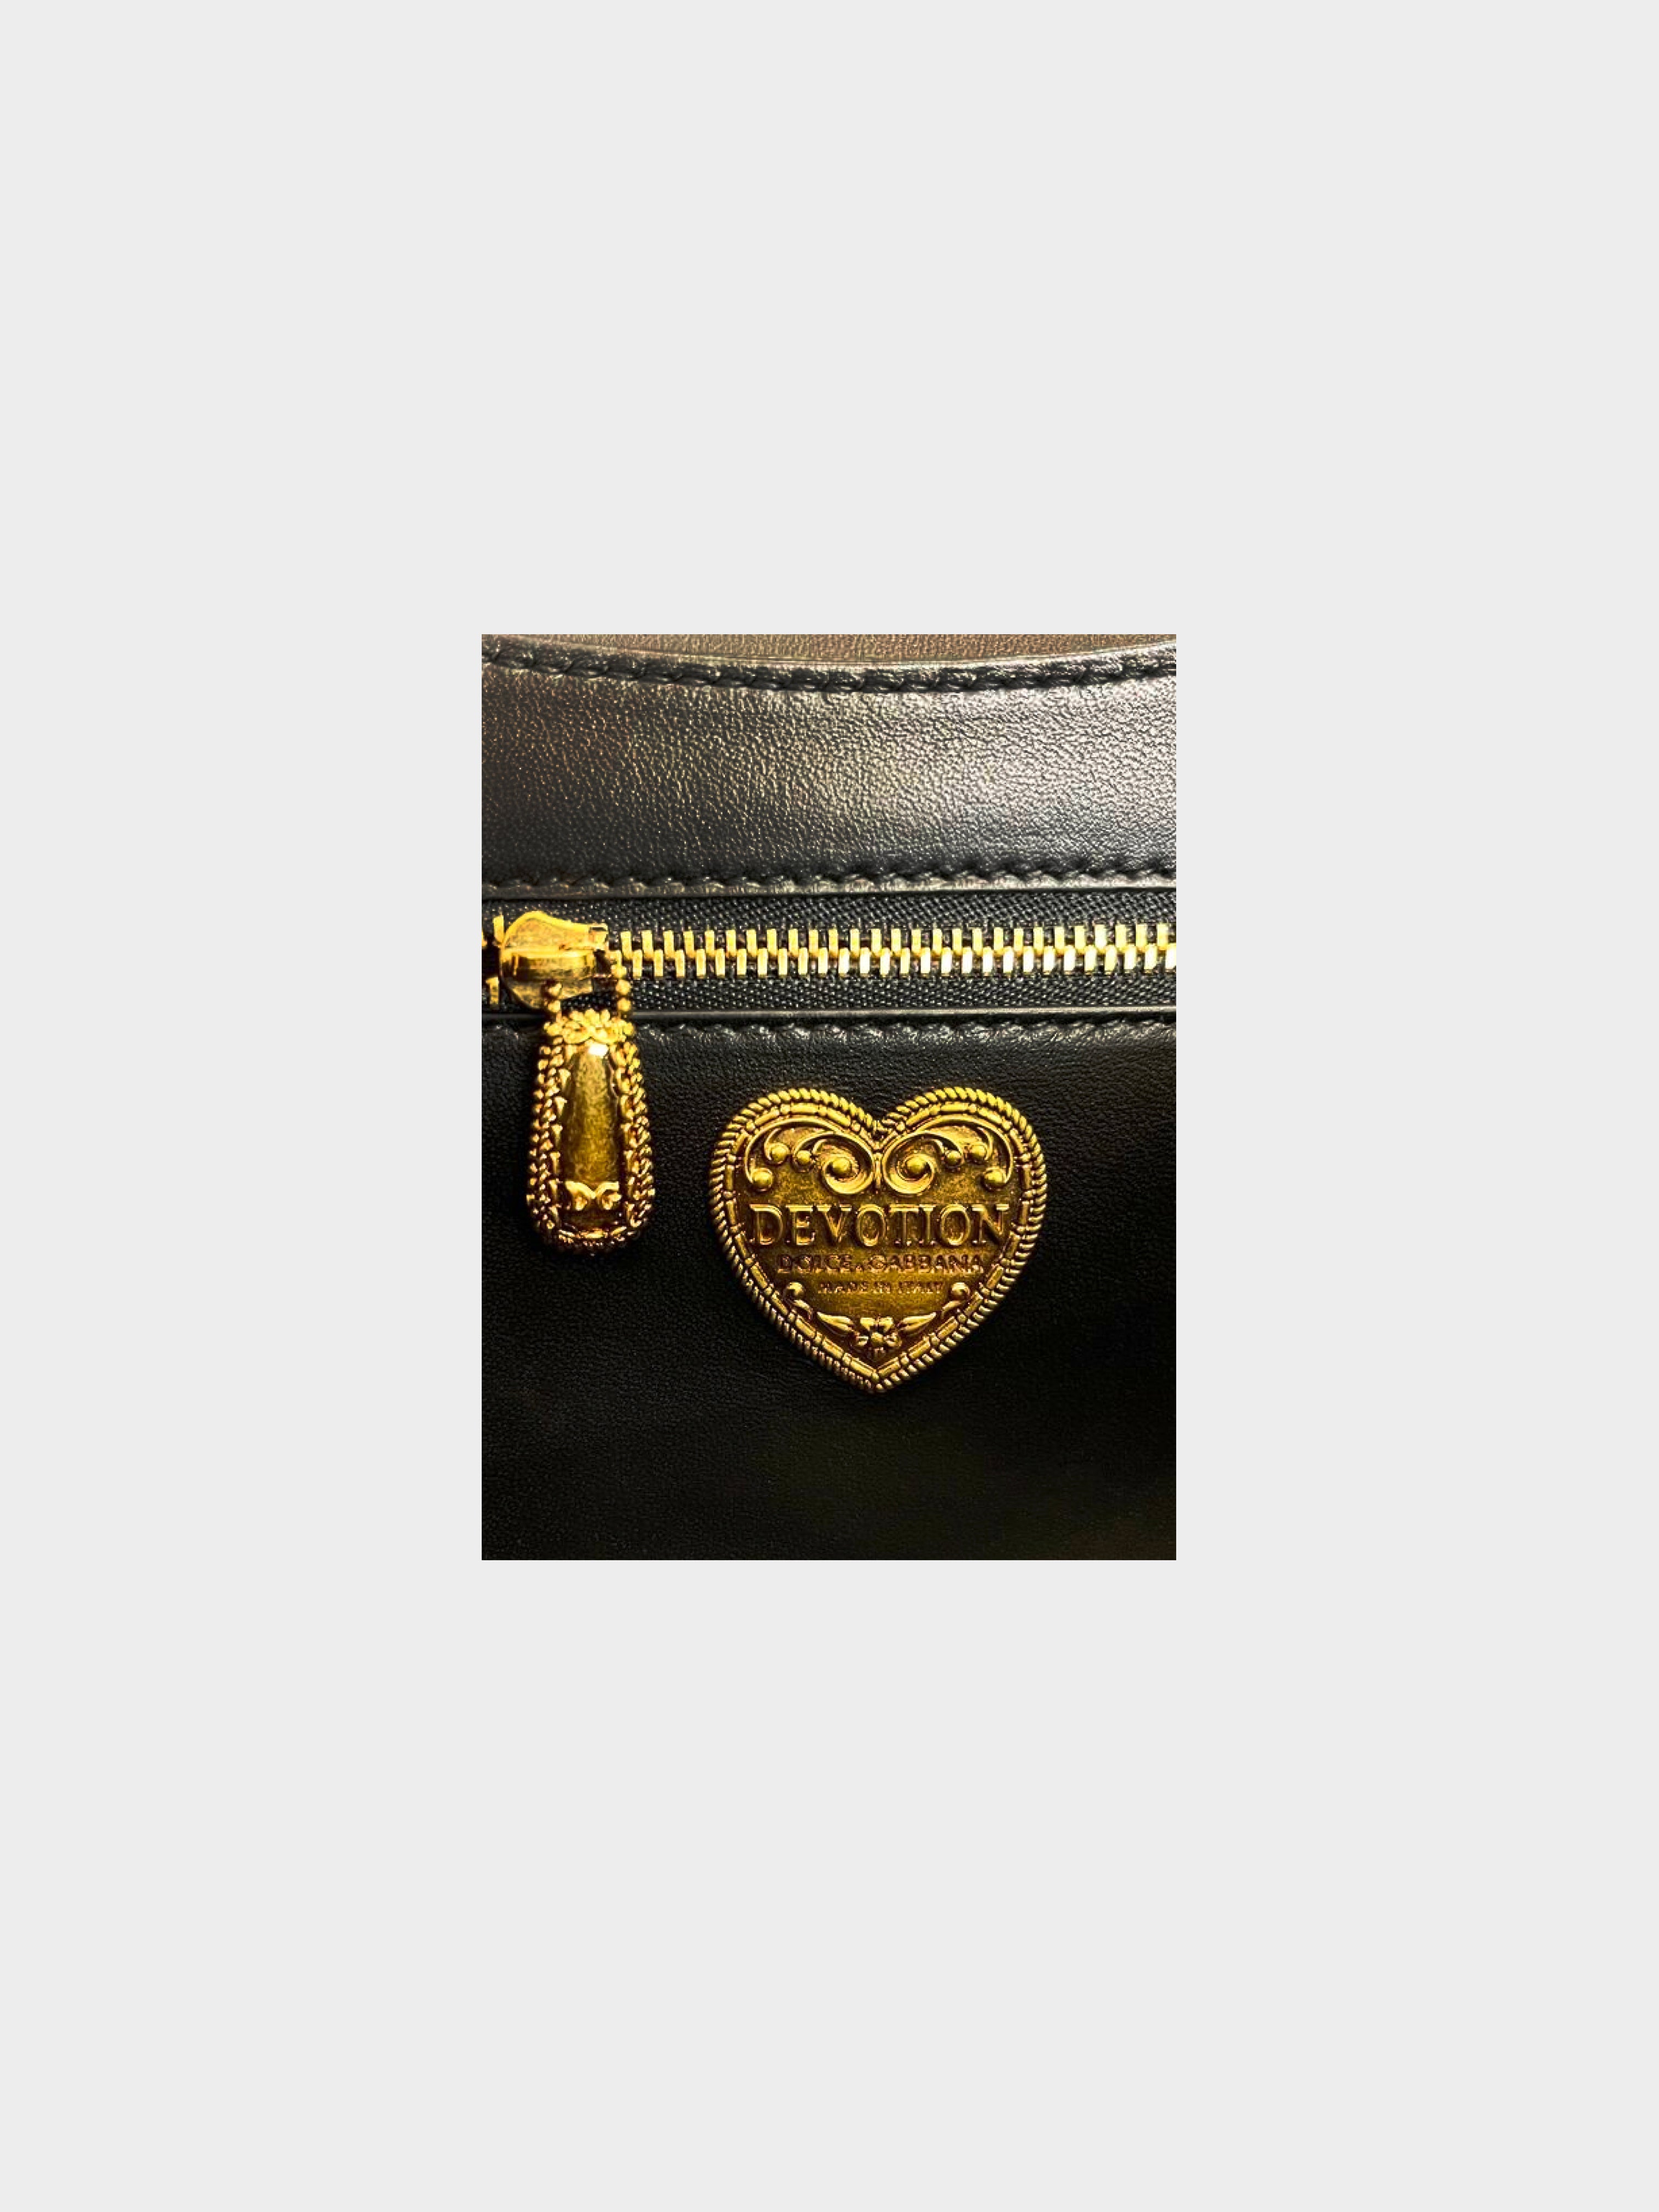 Dolce and Gabbana 2020s Heart Devotion Bag Black